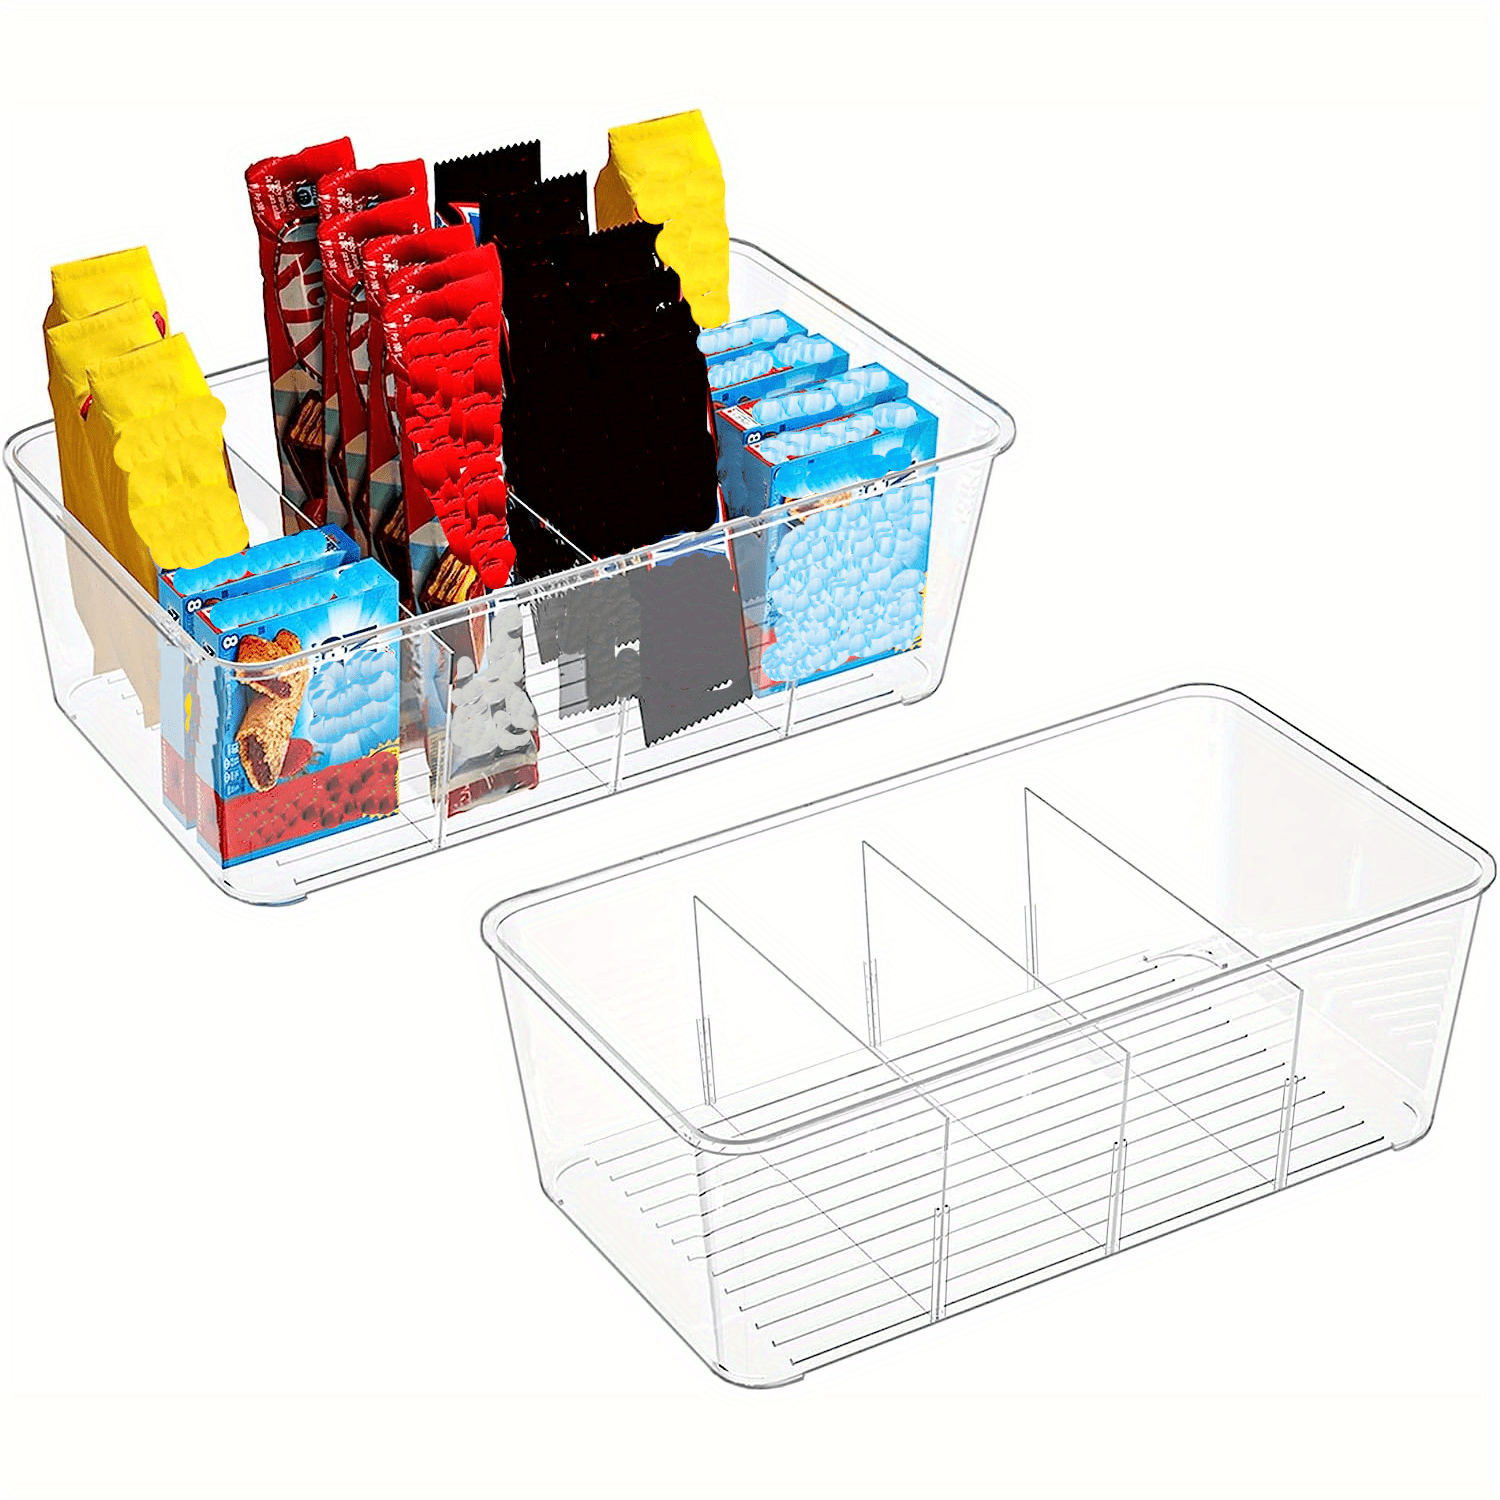 mDesign Plastic Stackable Bathroom Storage Organizer with Drawer